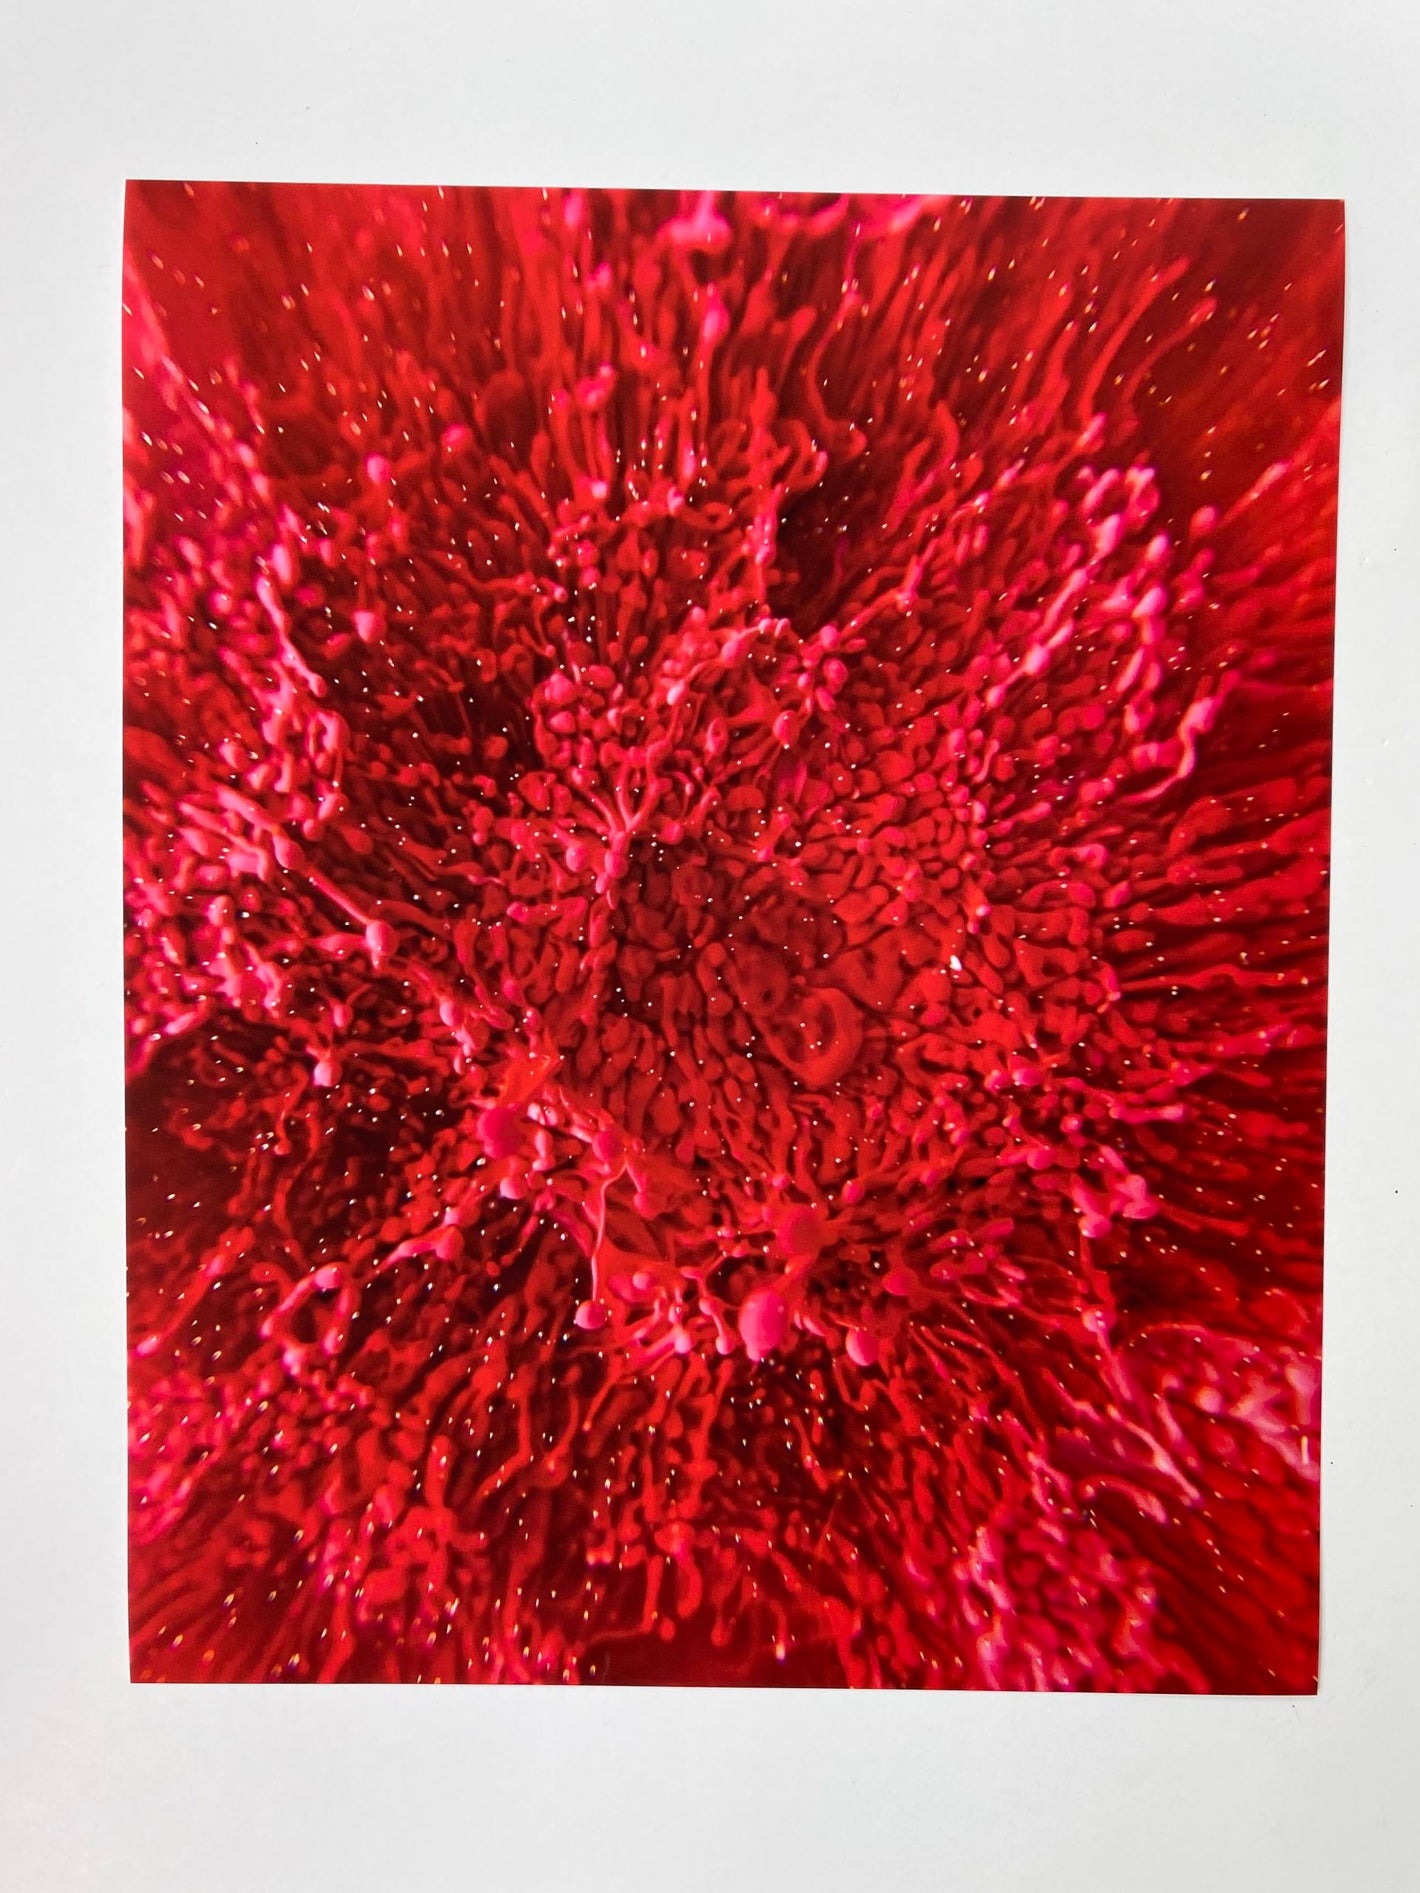 Bespattered Facade 8" x 10" Resin Petri Giclee Print #4